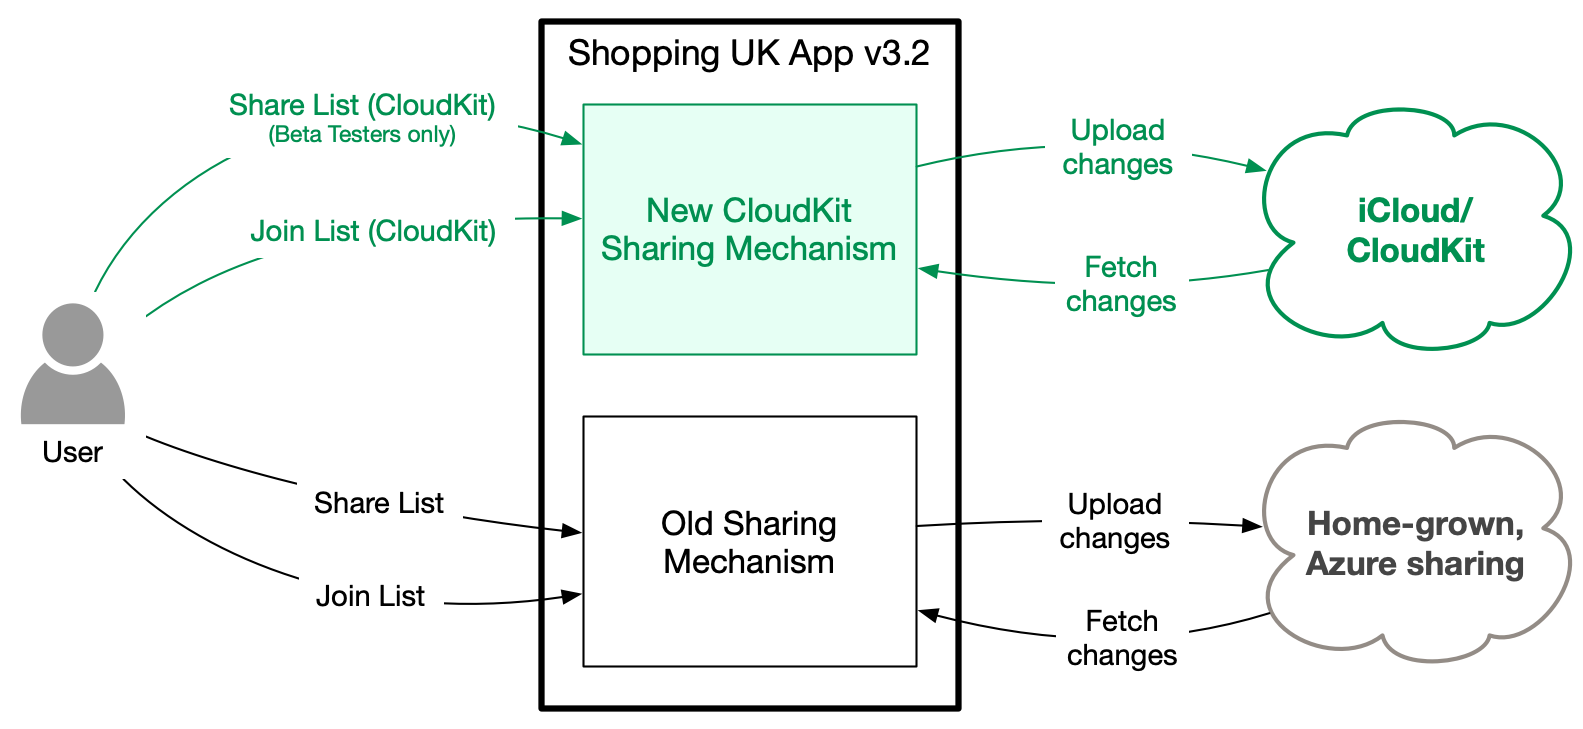 Sharing Mechanism in v3.2